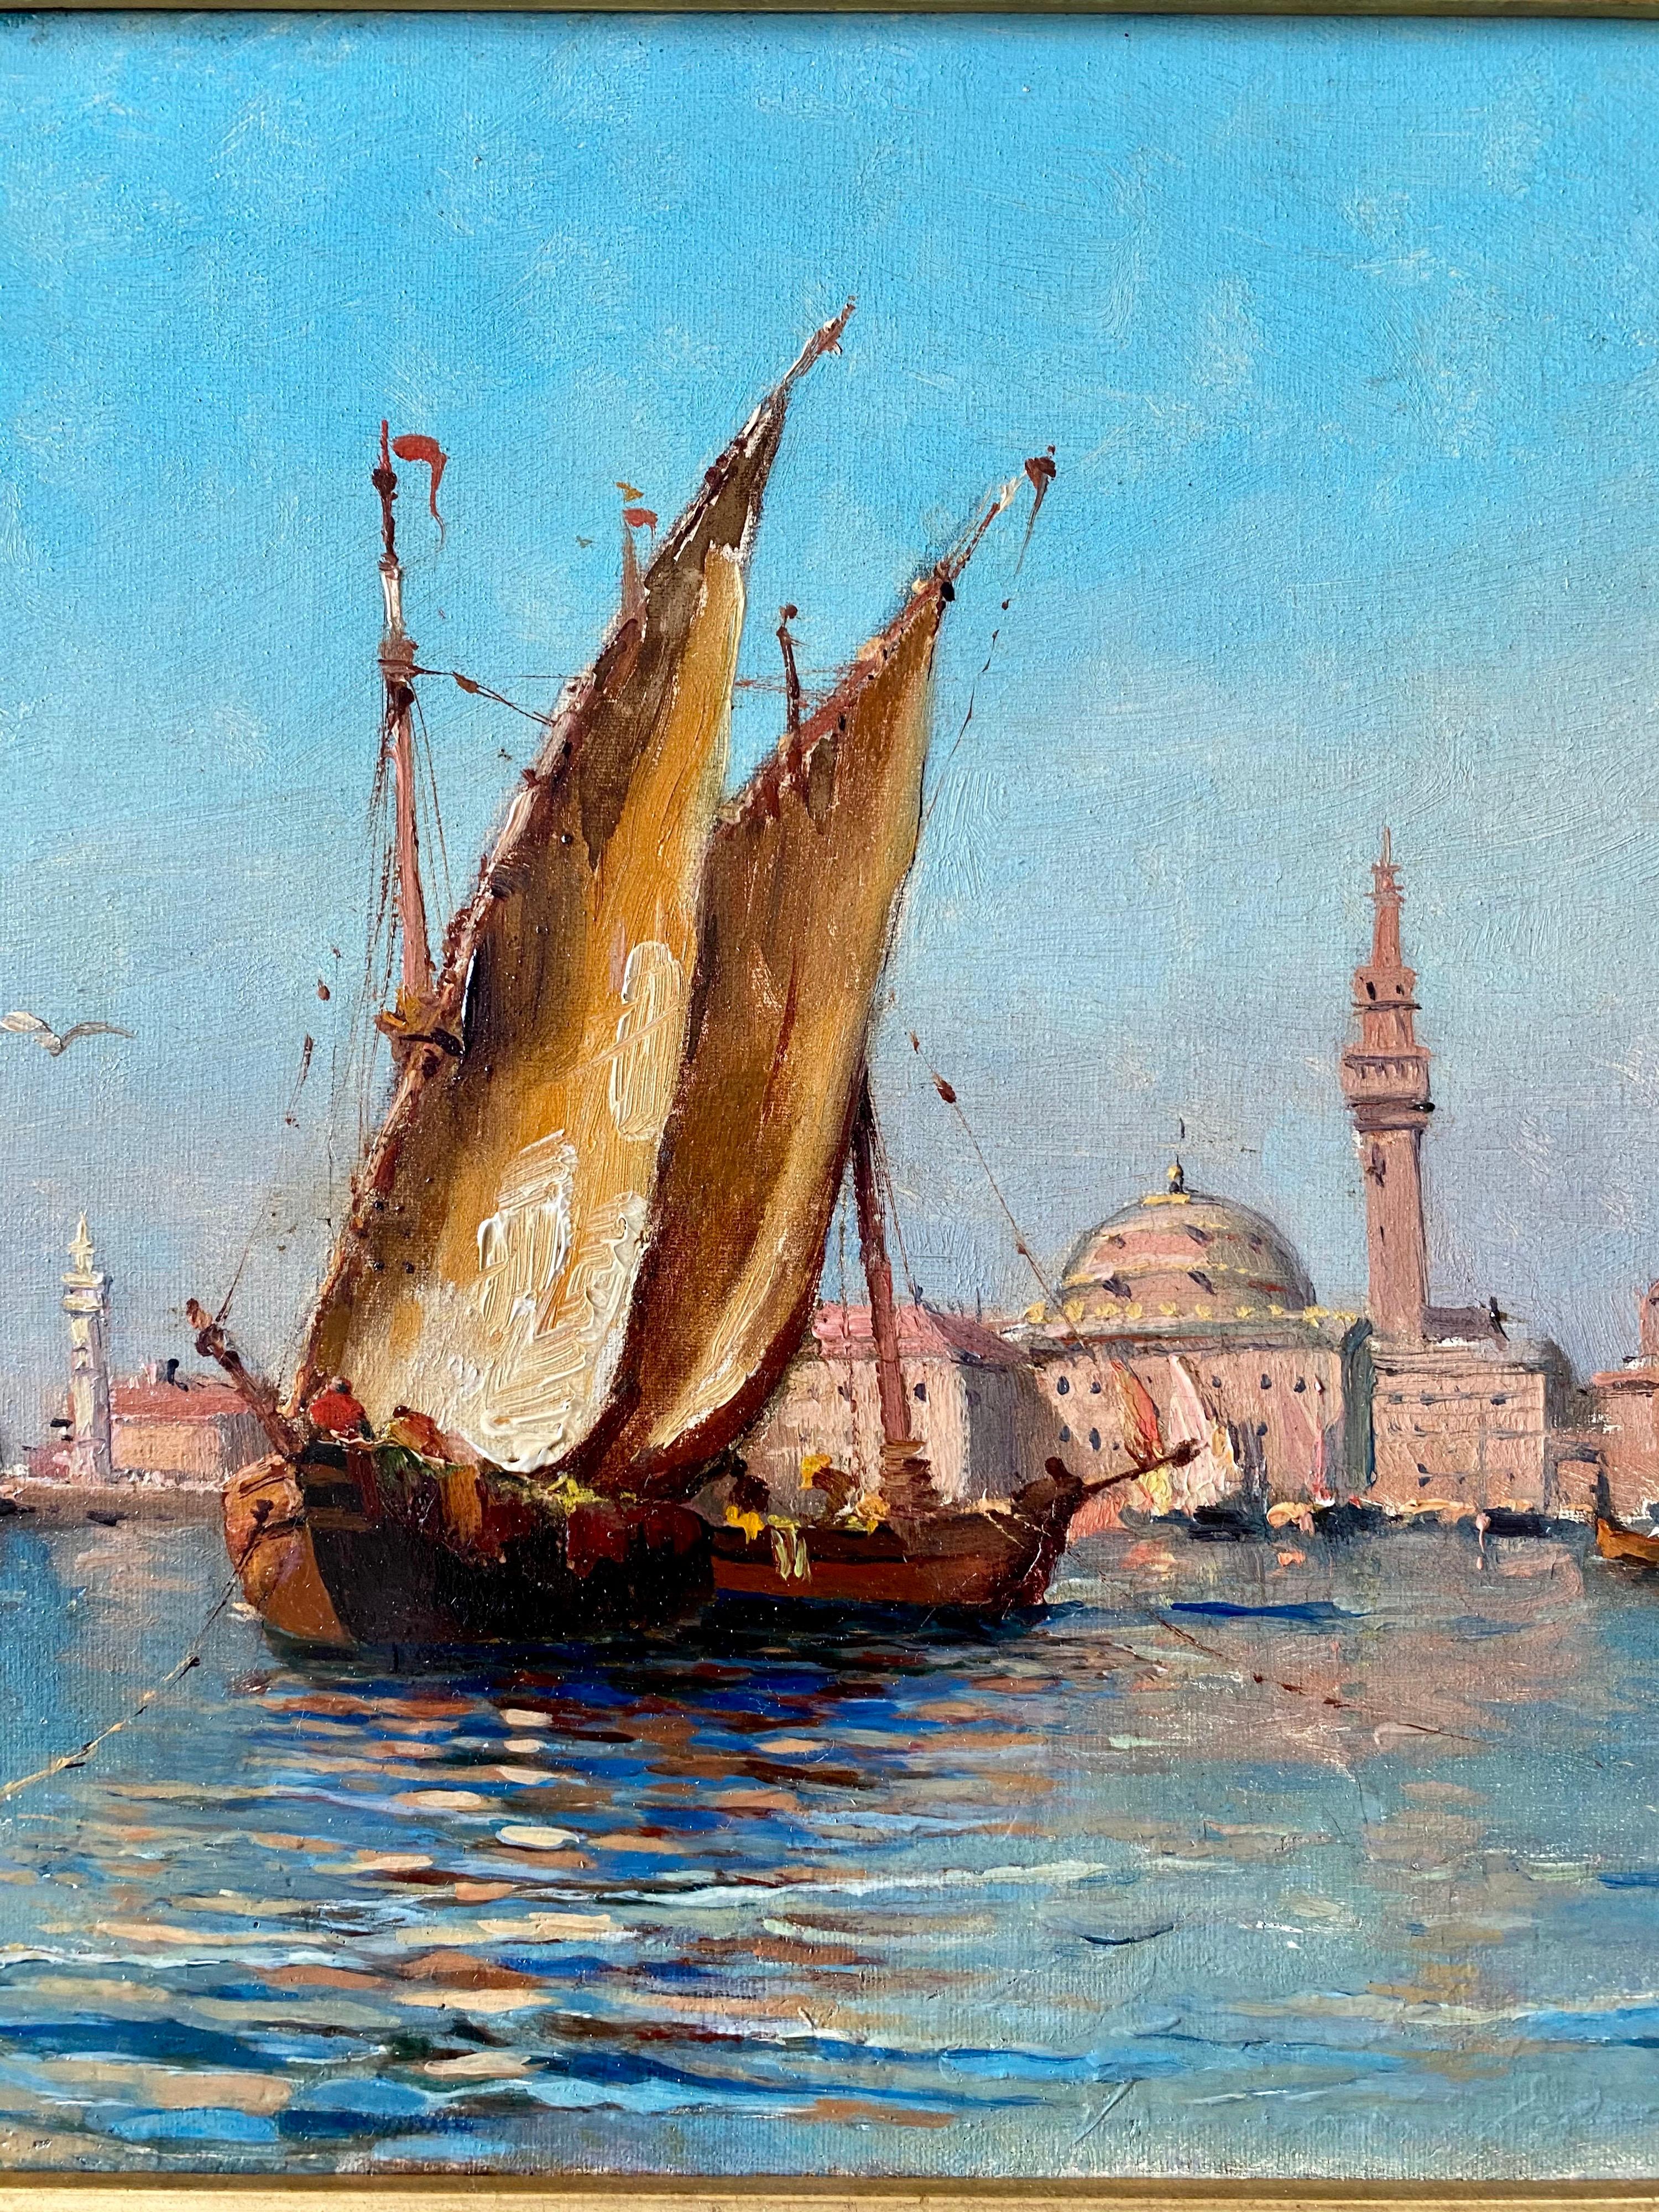 19th century French impressionist painting - View of Venice - Cityscape Boat - Impressionist Painting by Felix Ziem